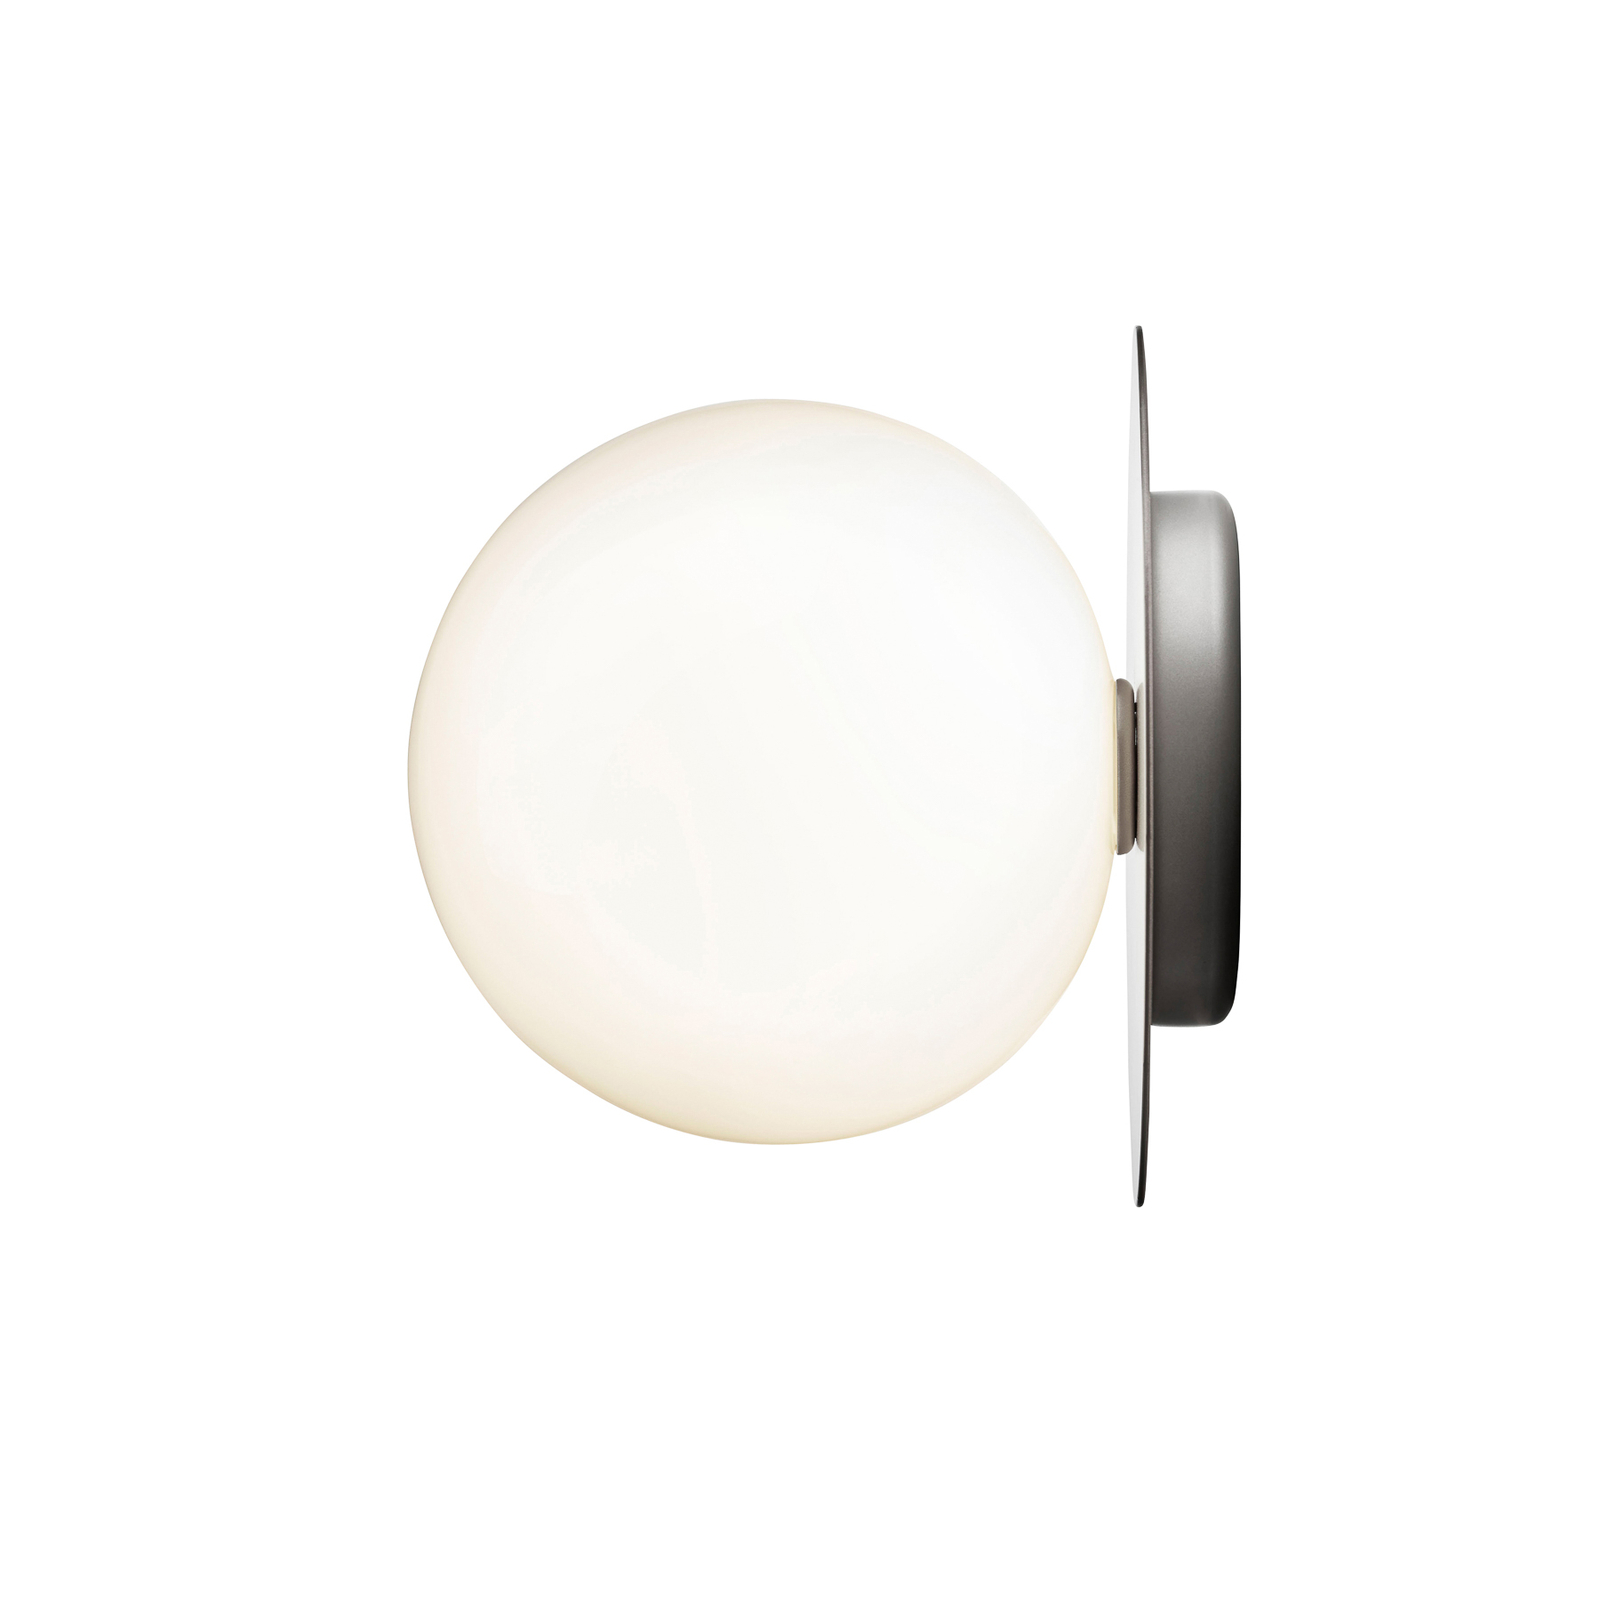 Nuura Liila 1 Large wandlamp 1-lamp zilver/wit